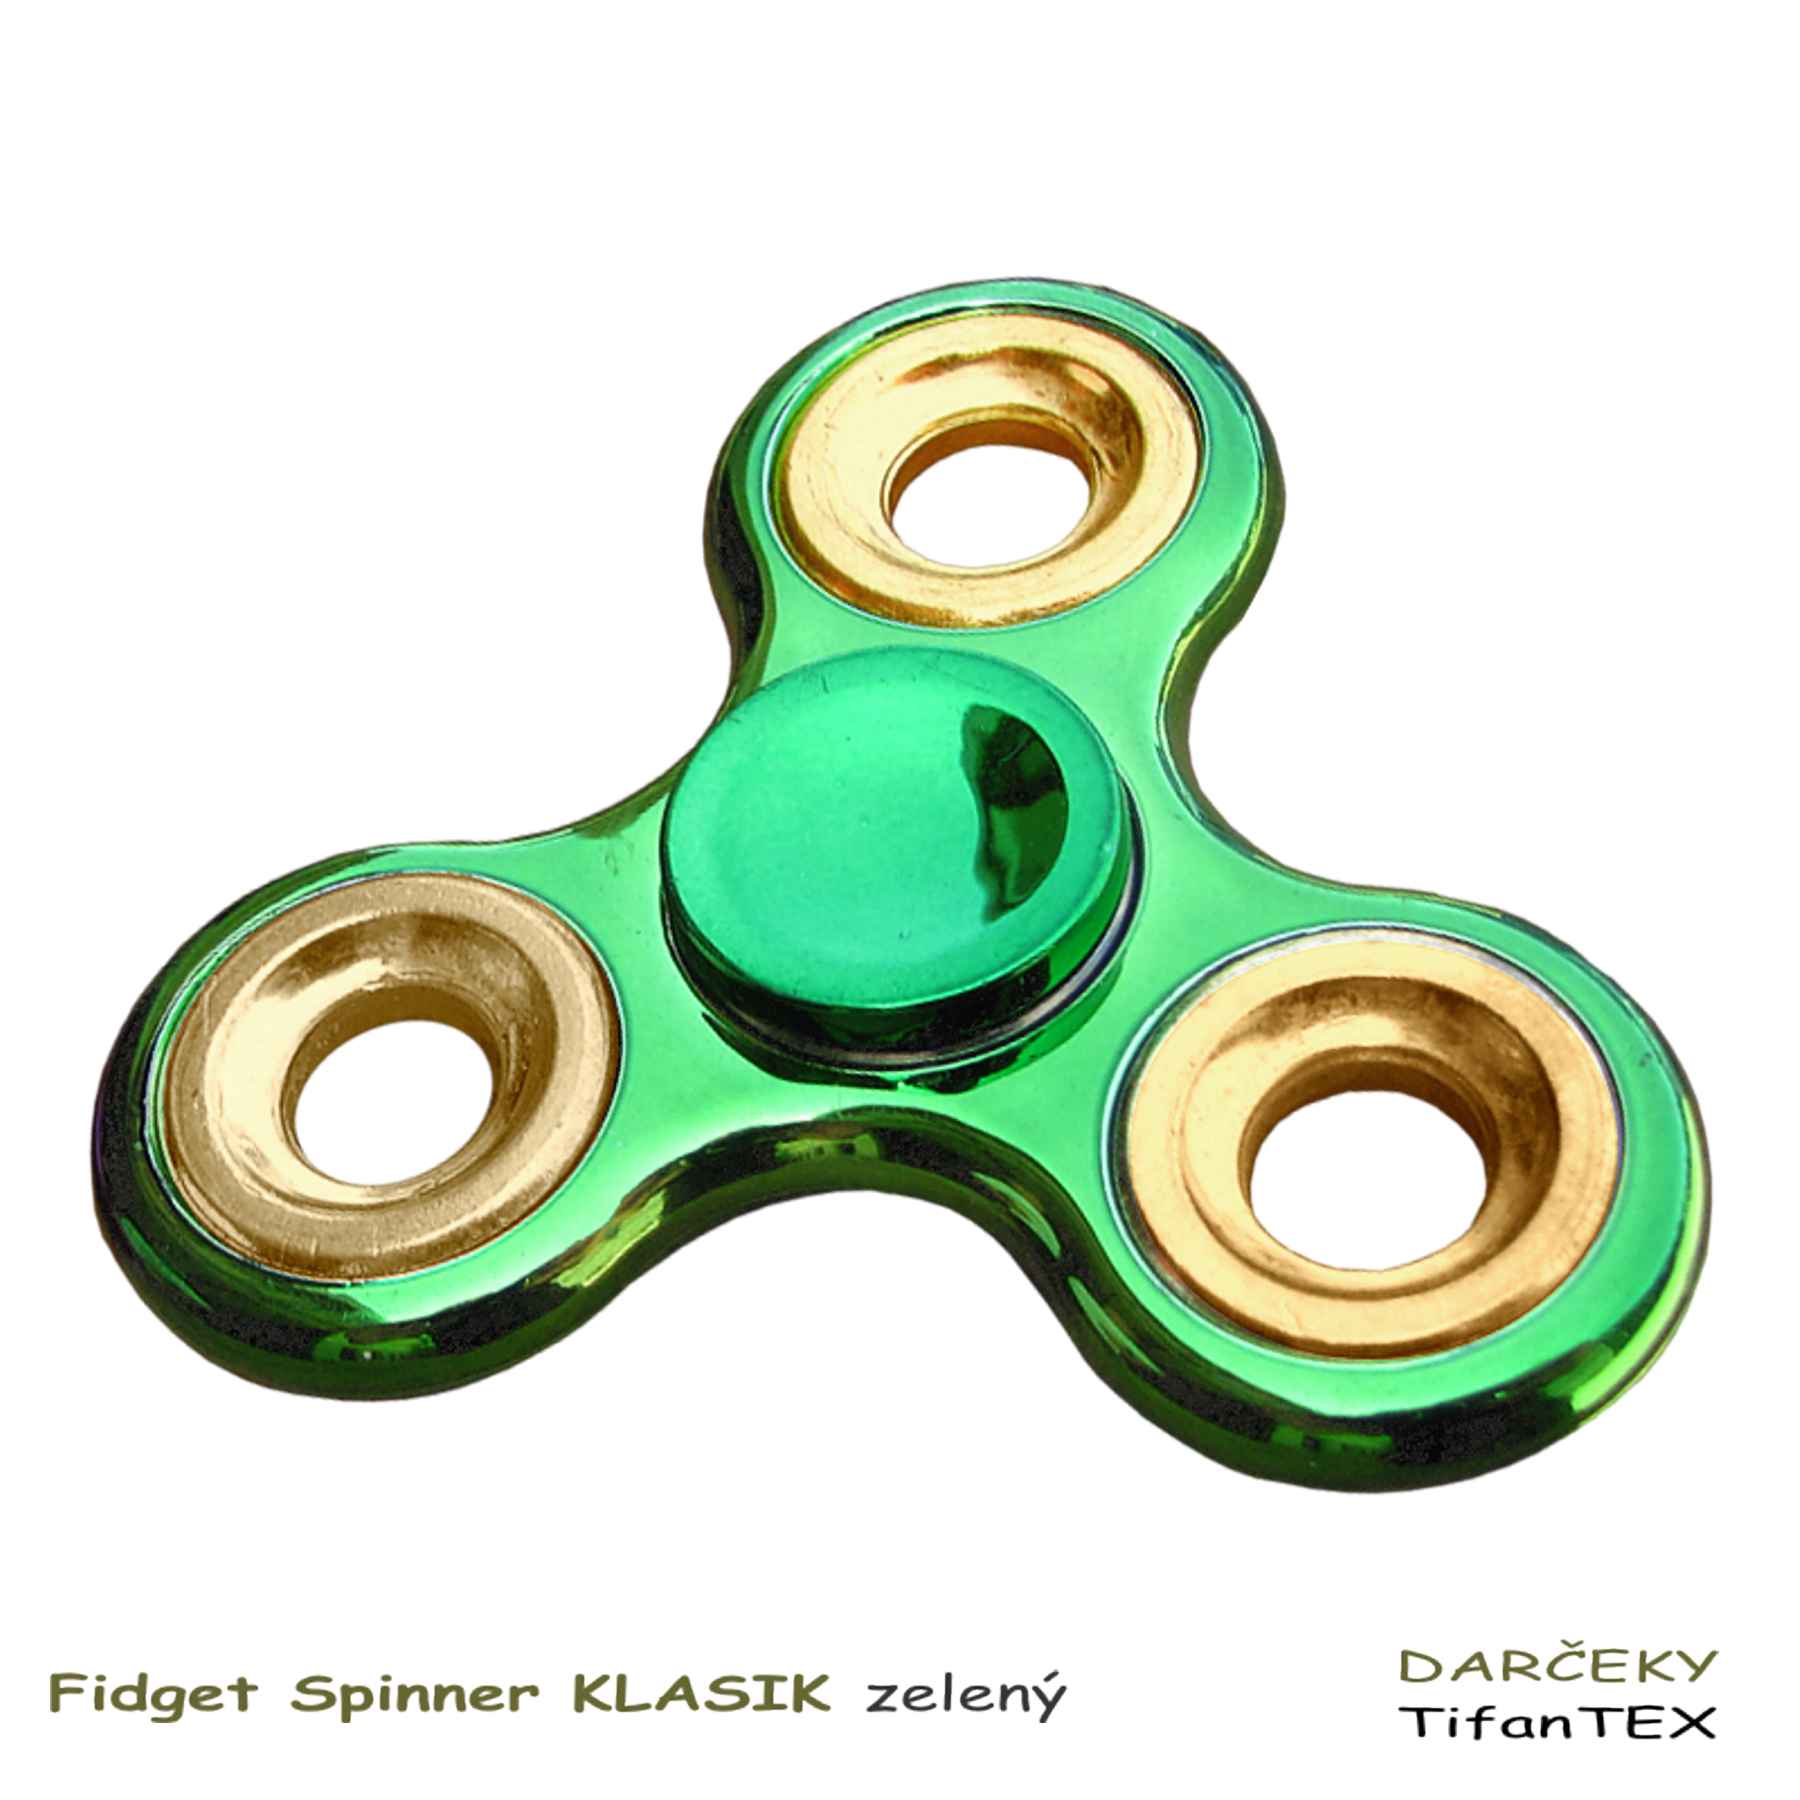 Antistresová hračka fidget Spinner Klasik zelený, veľkoobchod Tifantex hračky